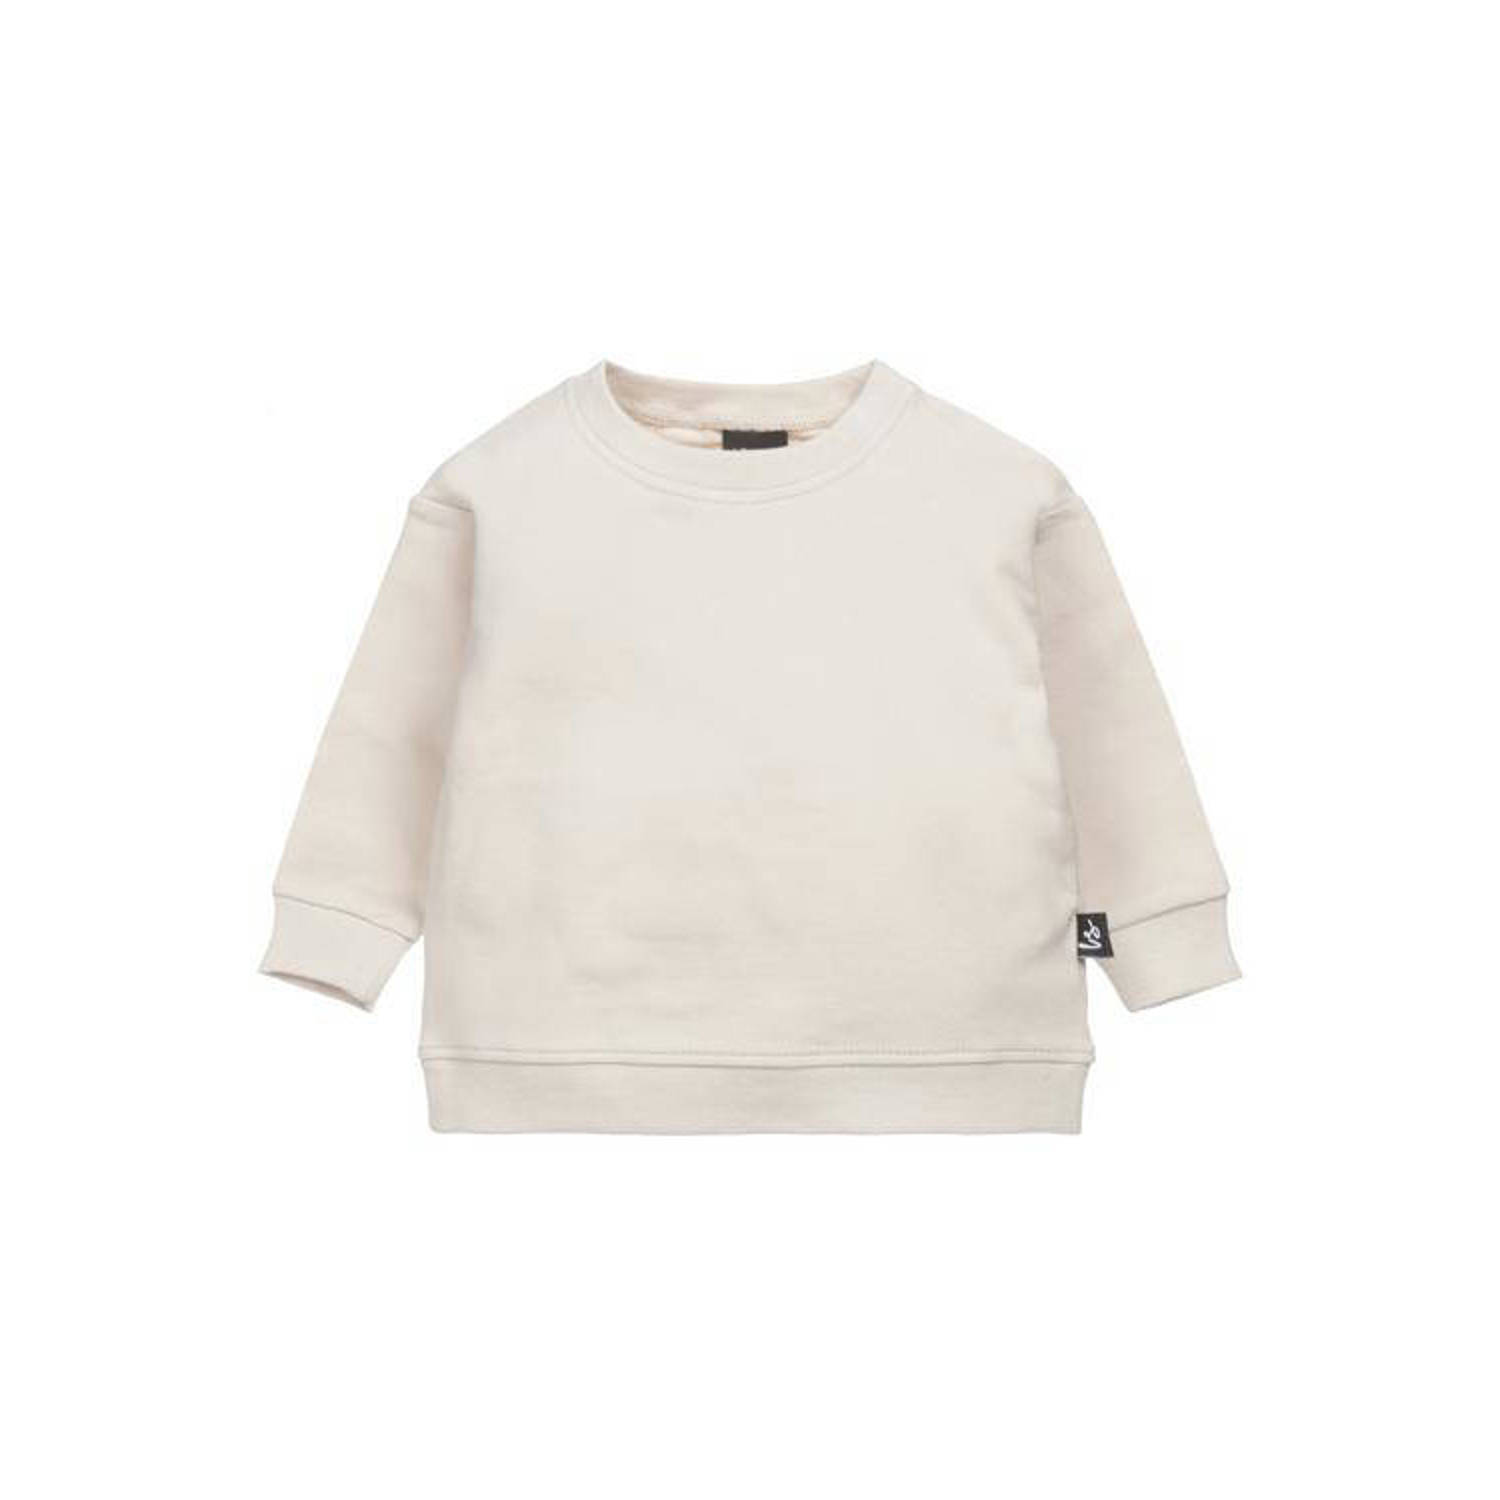 Babystyling baby sweater ecru 62 68 | Sweater van